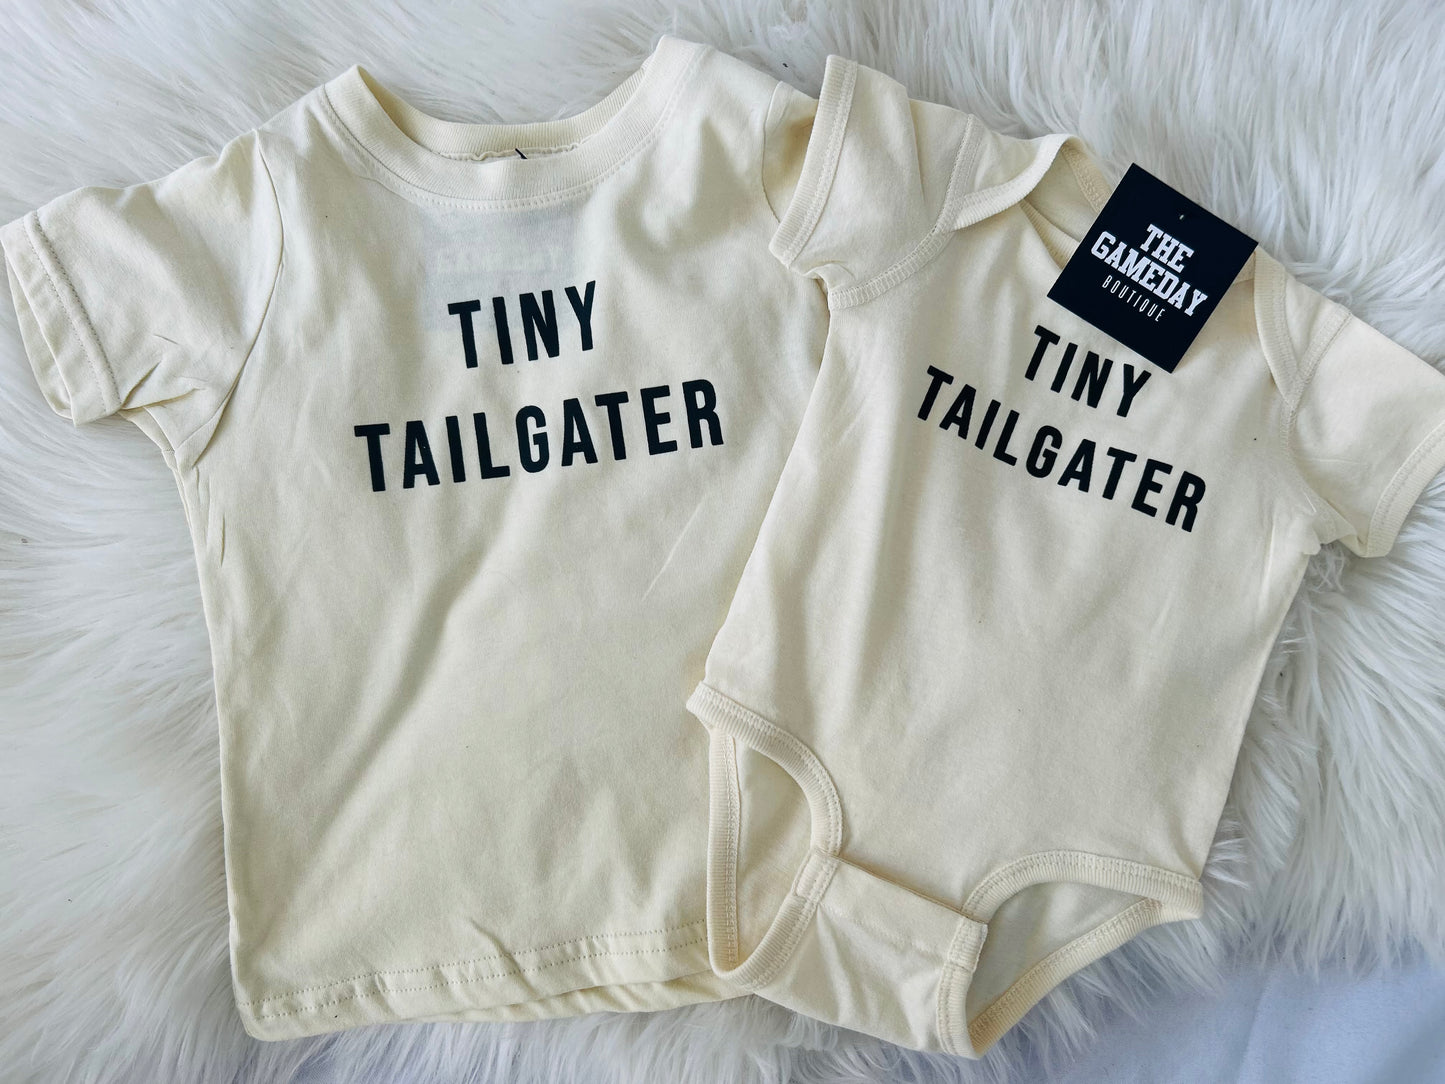 Baby Tiny Tailgater Bodysuit